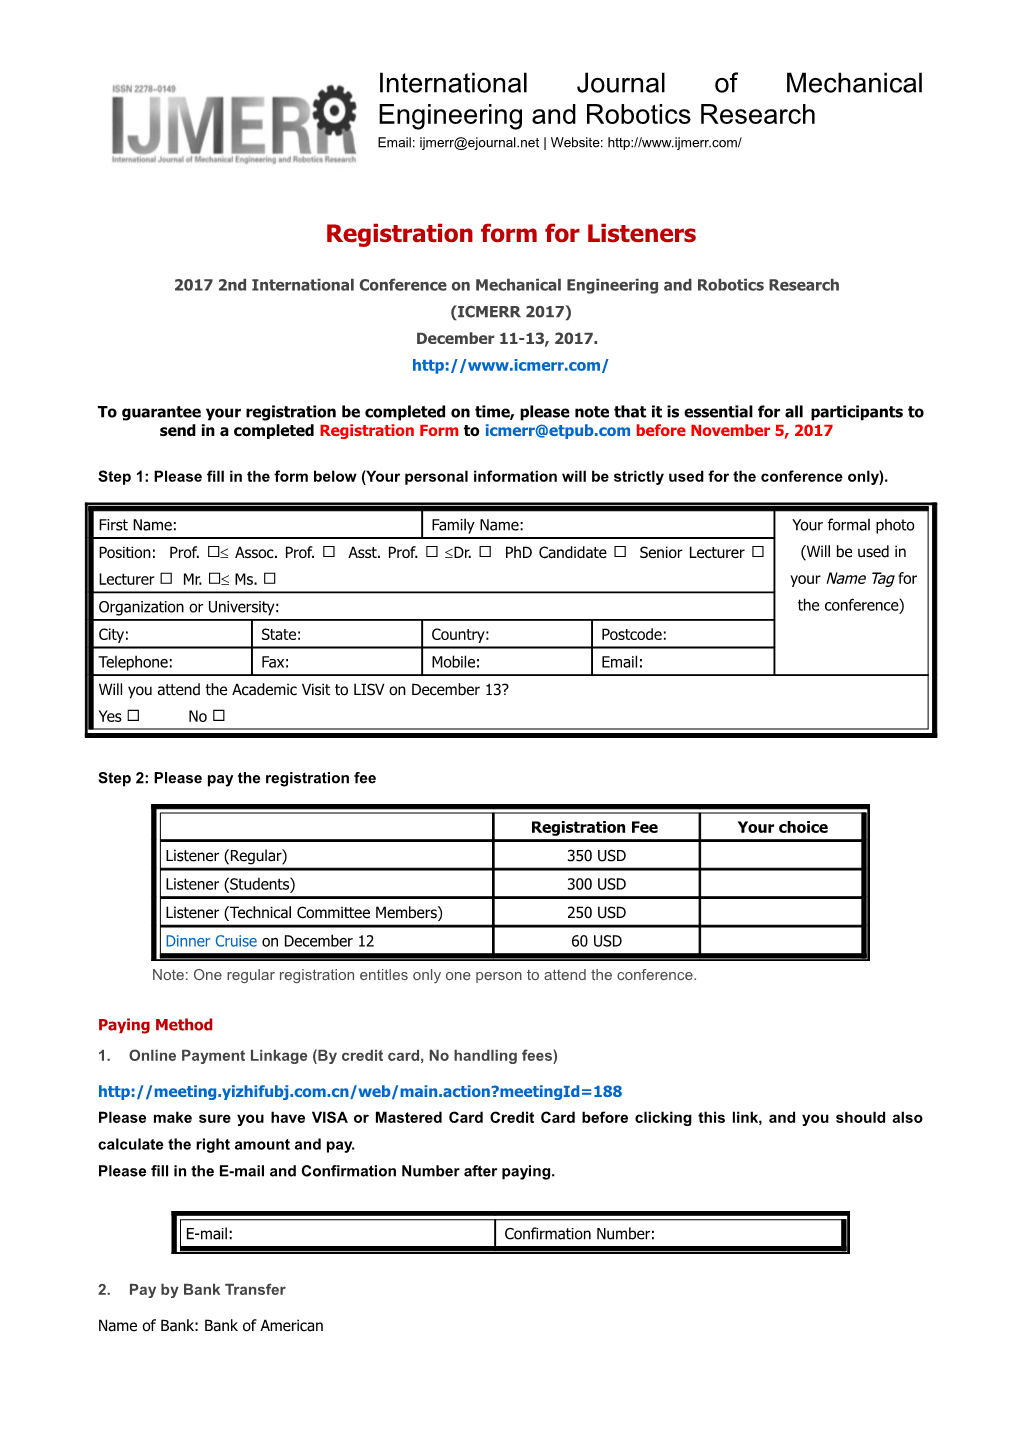 Registration Form for Listeners s1